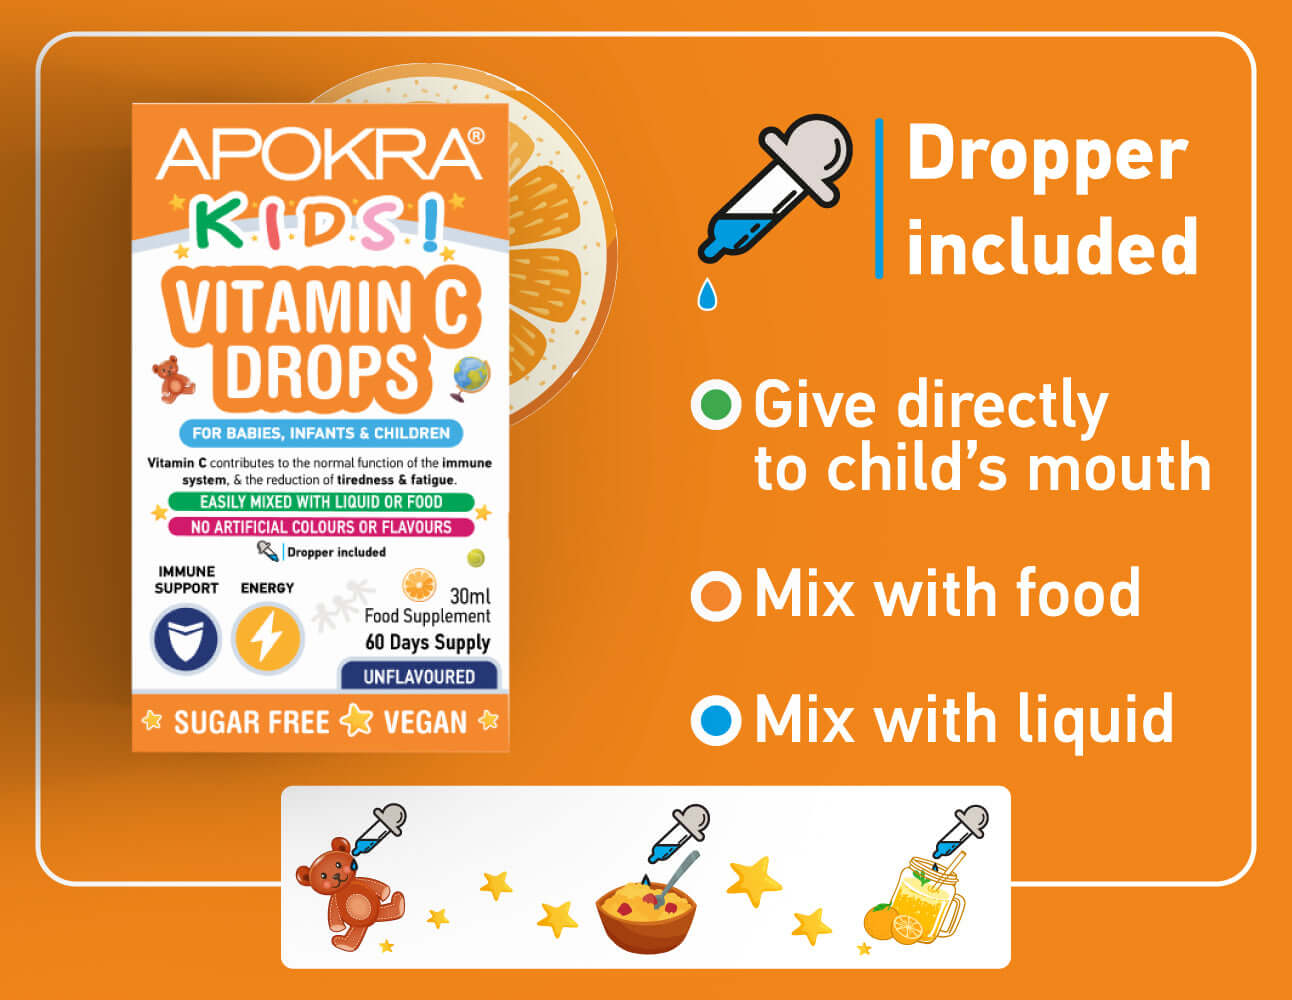 Vitamin C drops can be mixed with food & liquid - APOKRA